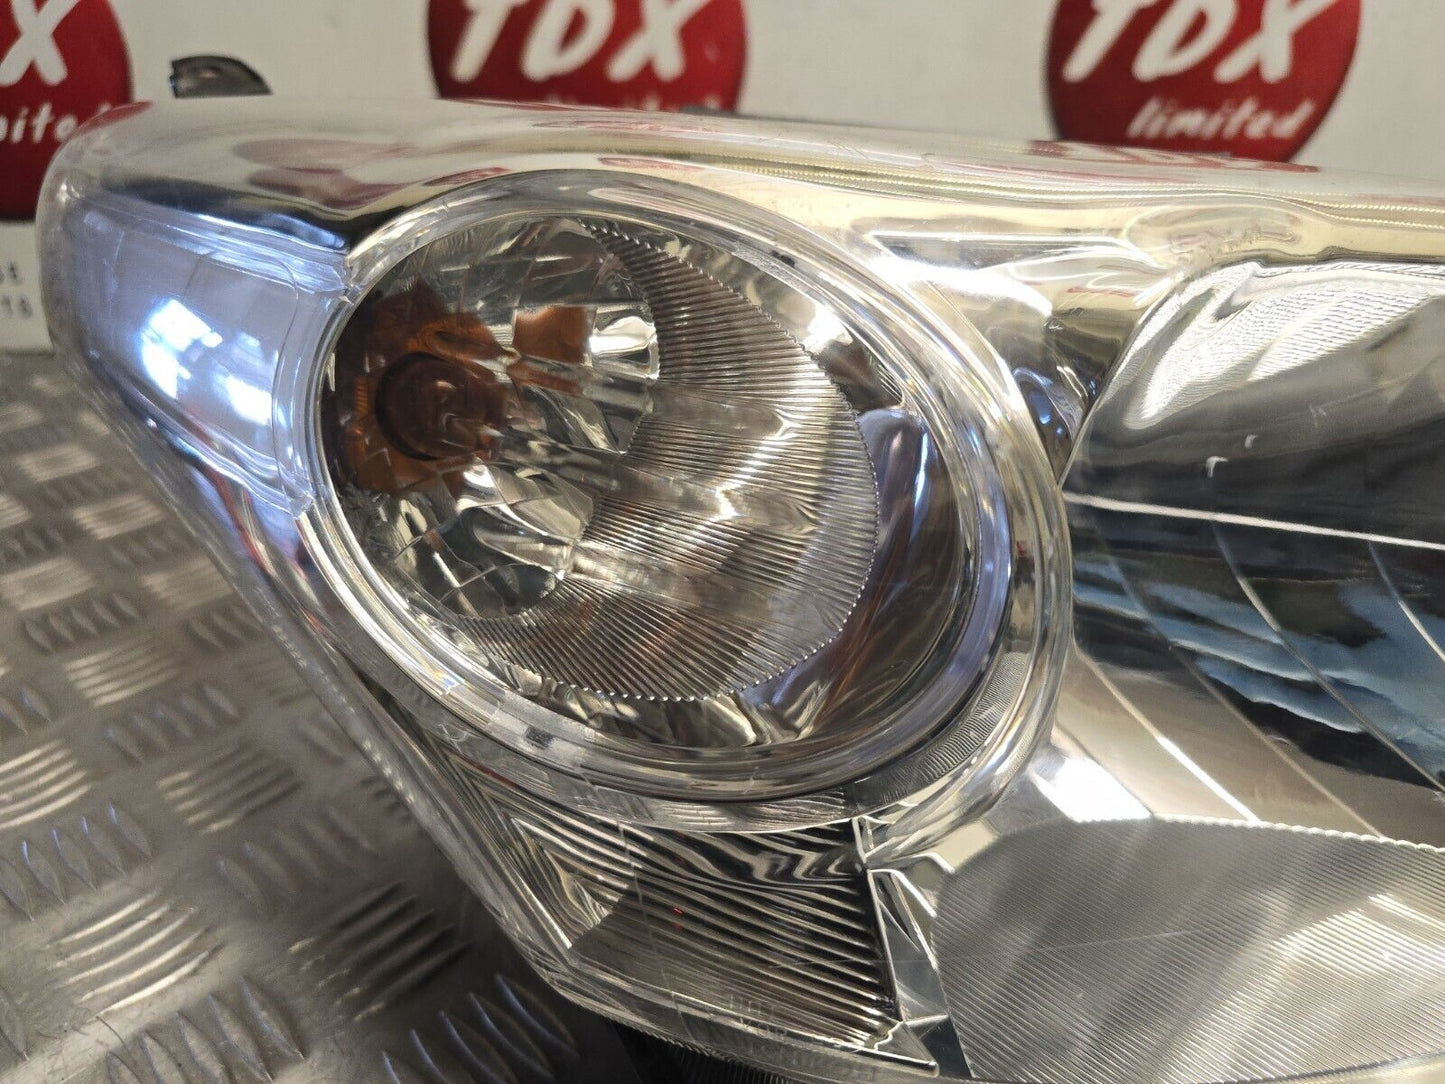 TOYOTA IQ 2009-2013 GENUINE DRIVERS SIDE FRONT HALOGEN HEADLIGHT LAMP